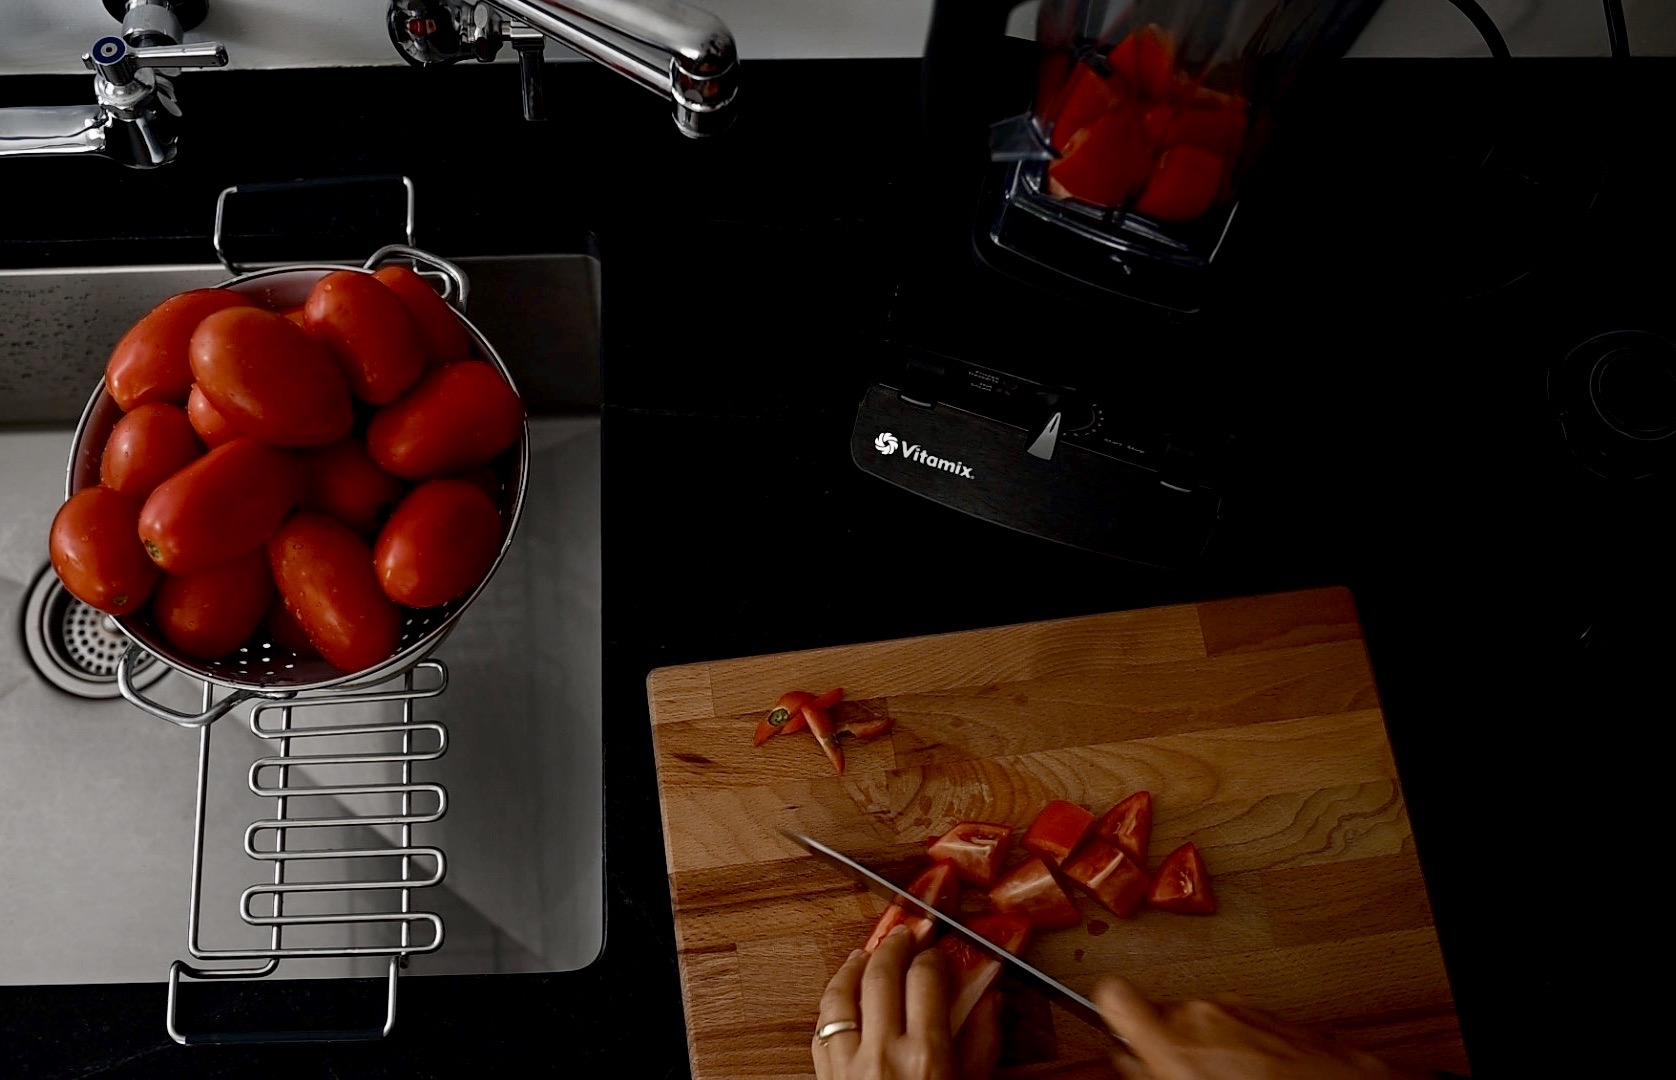 wash and chop tomatoes